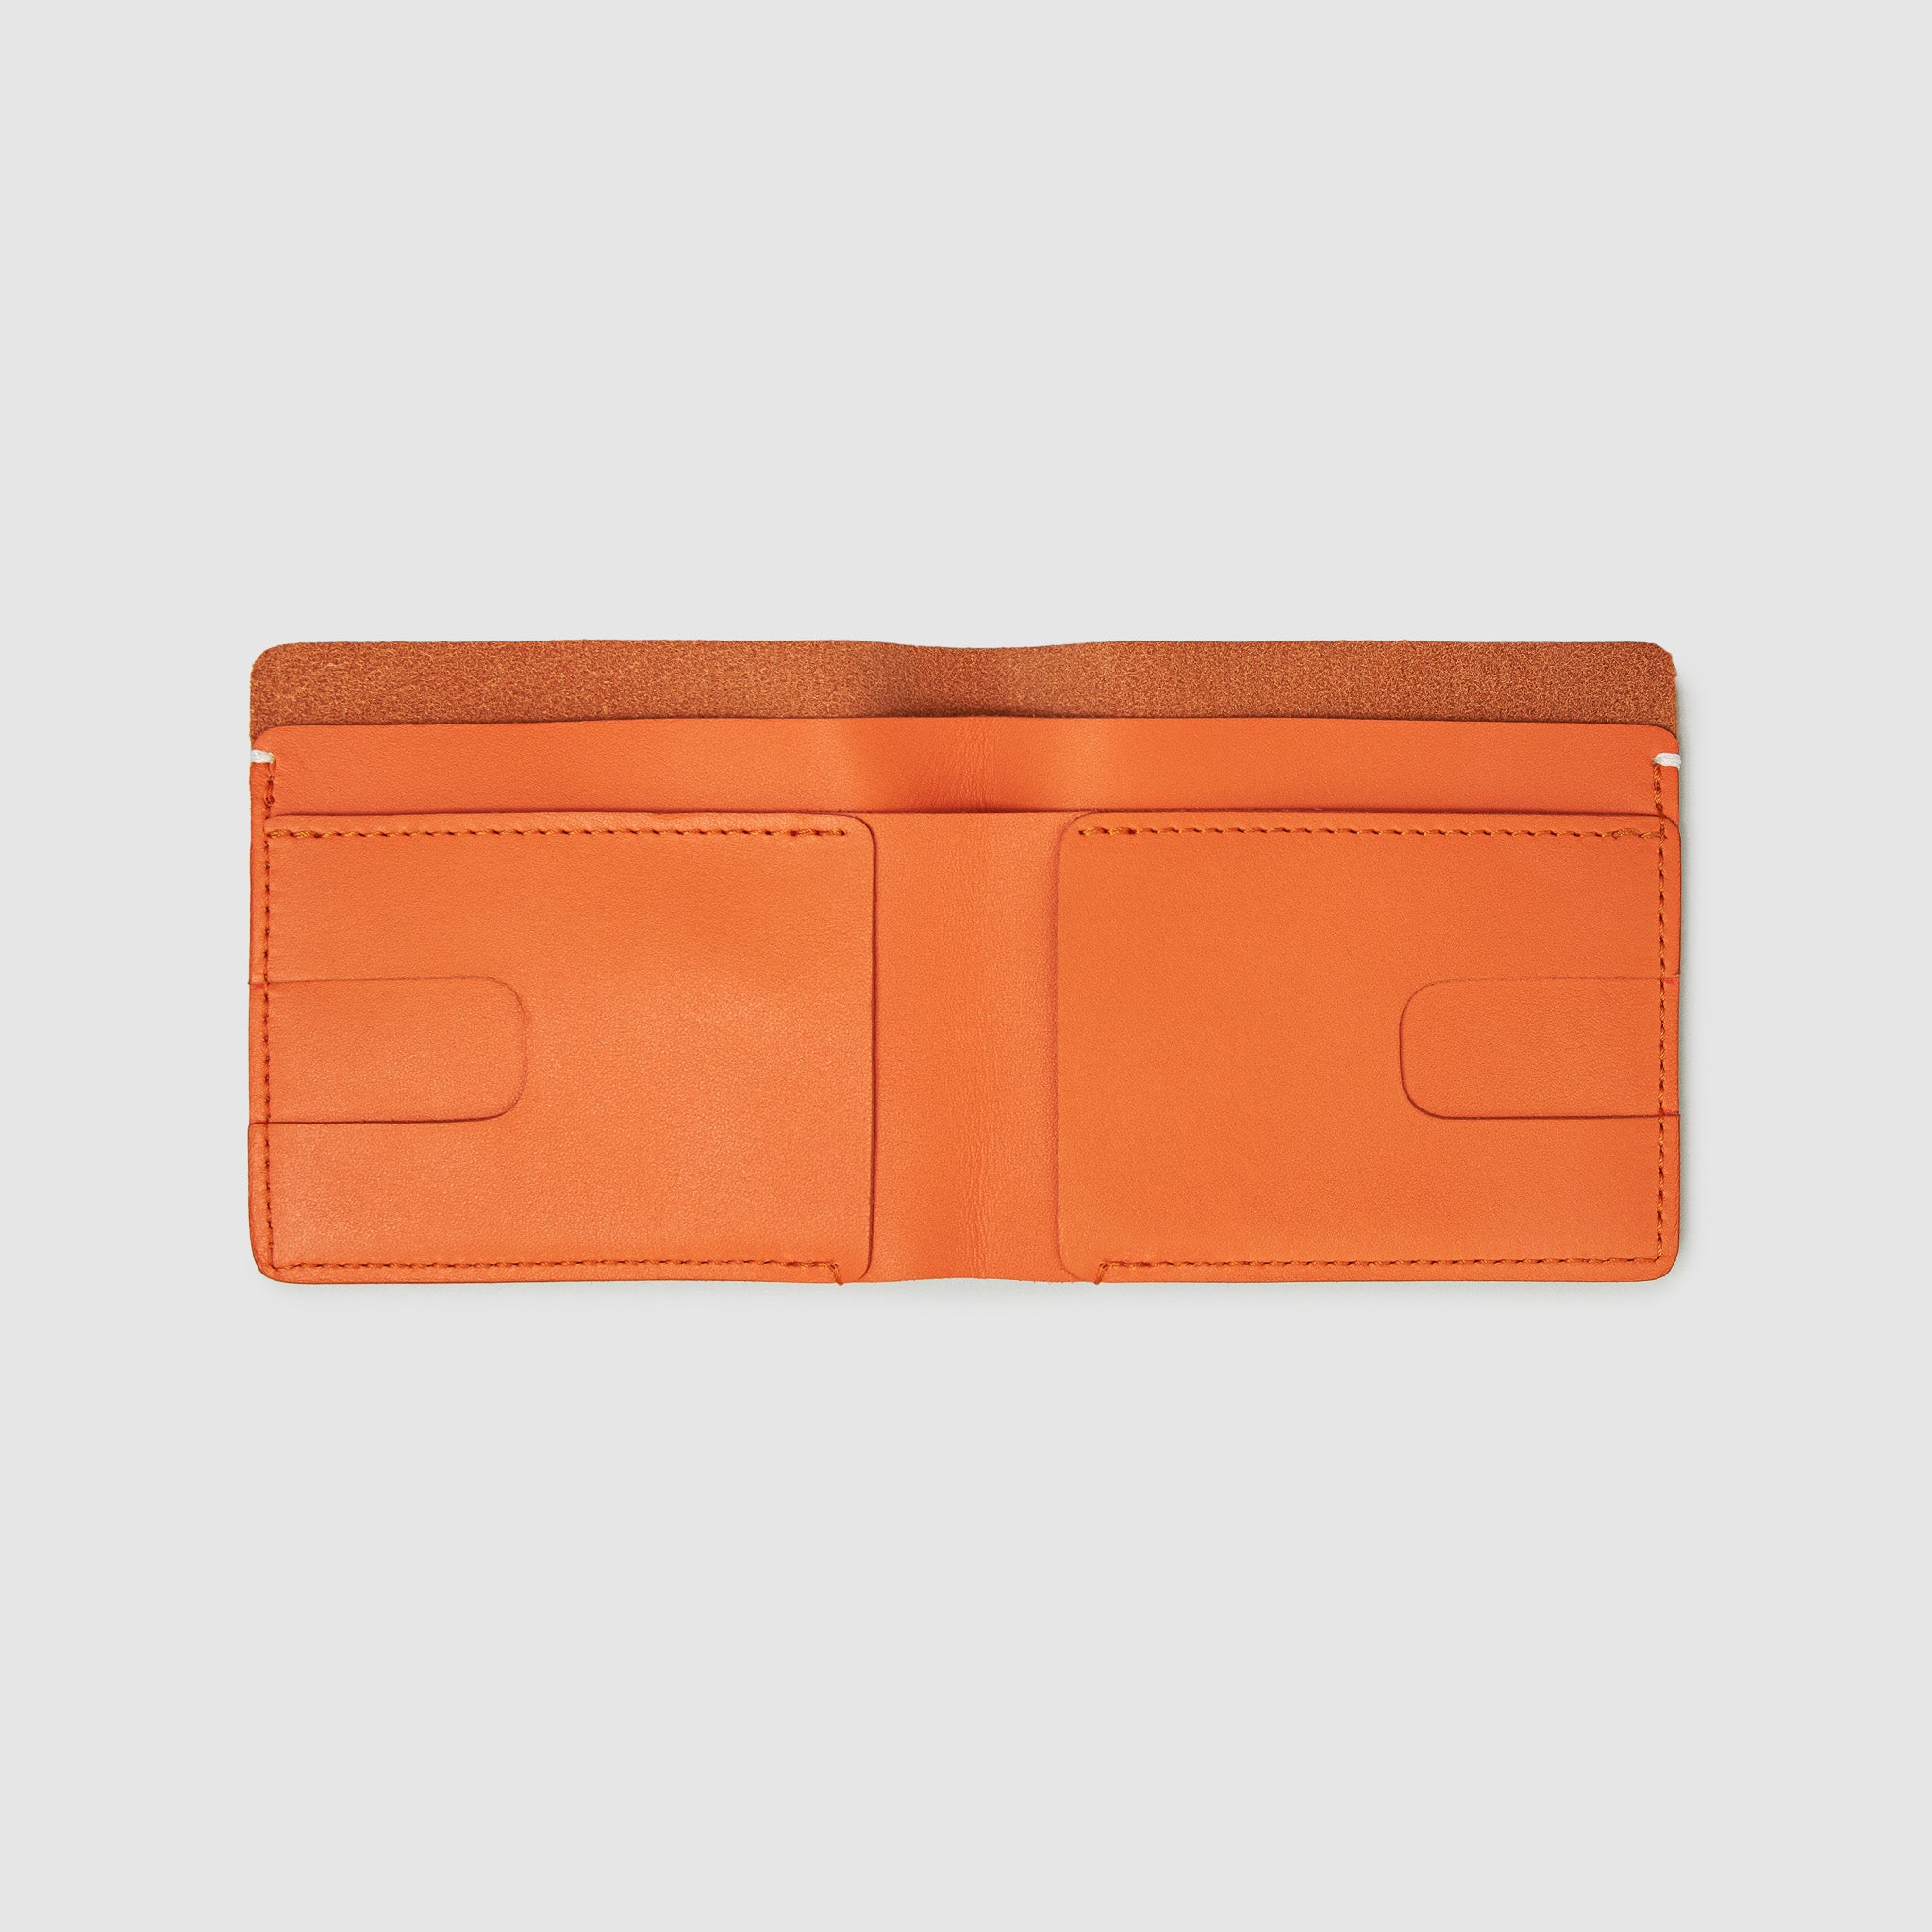 Anson Calder International Billfold Wallet RFID french calfskin leather _fshd-orange